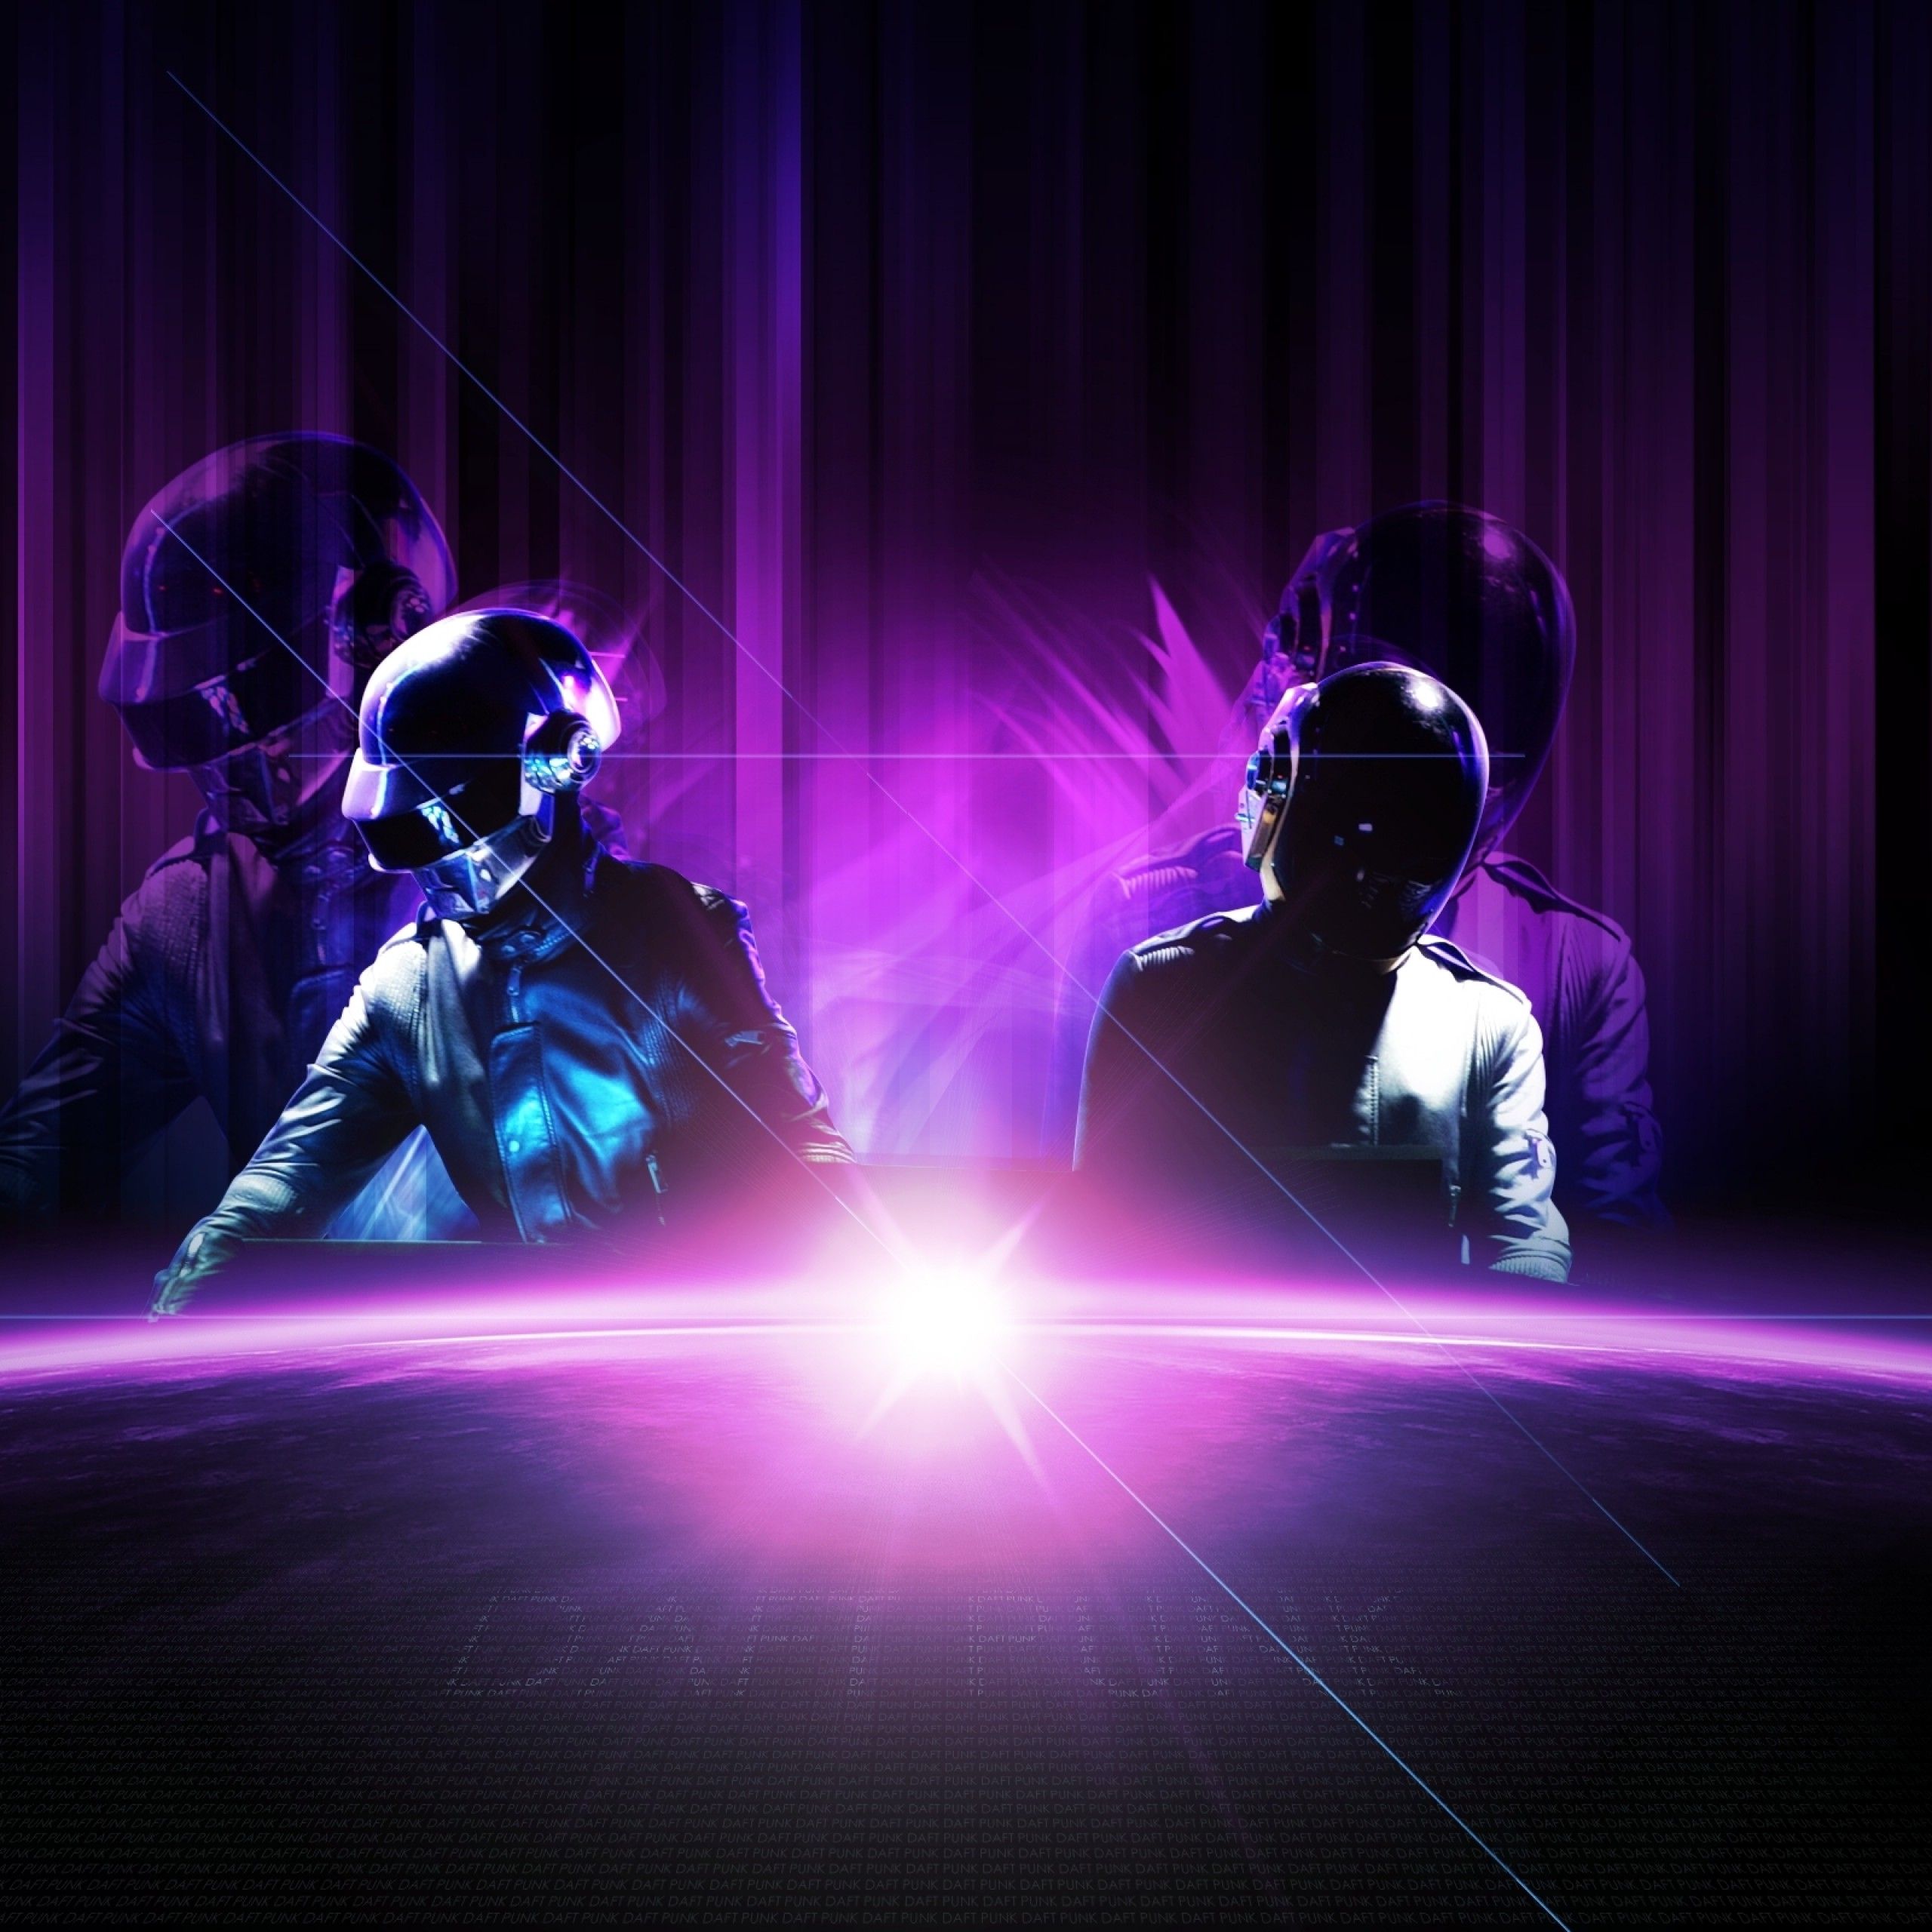 Daft Punk 4K Wallpaper, Live concert, Electronic music duo, Purple, Neon, Music